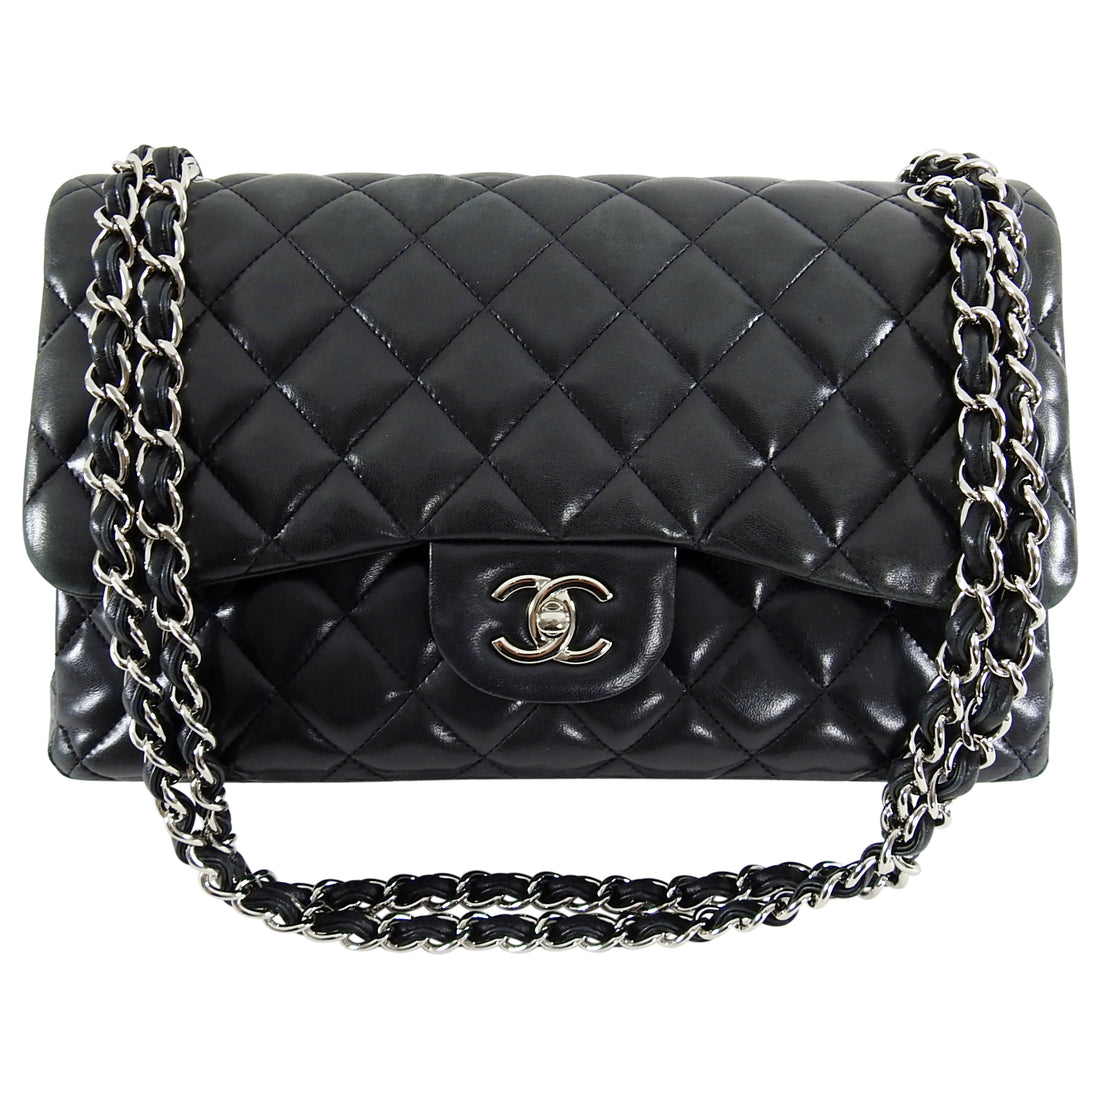 Chanel Lambskin Black Classic Jumbo Double Flap Silver Bag – I